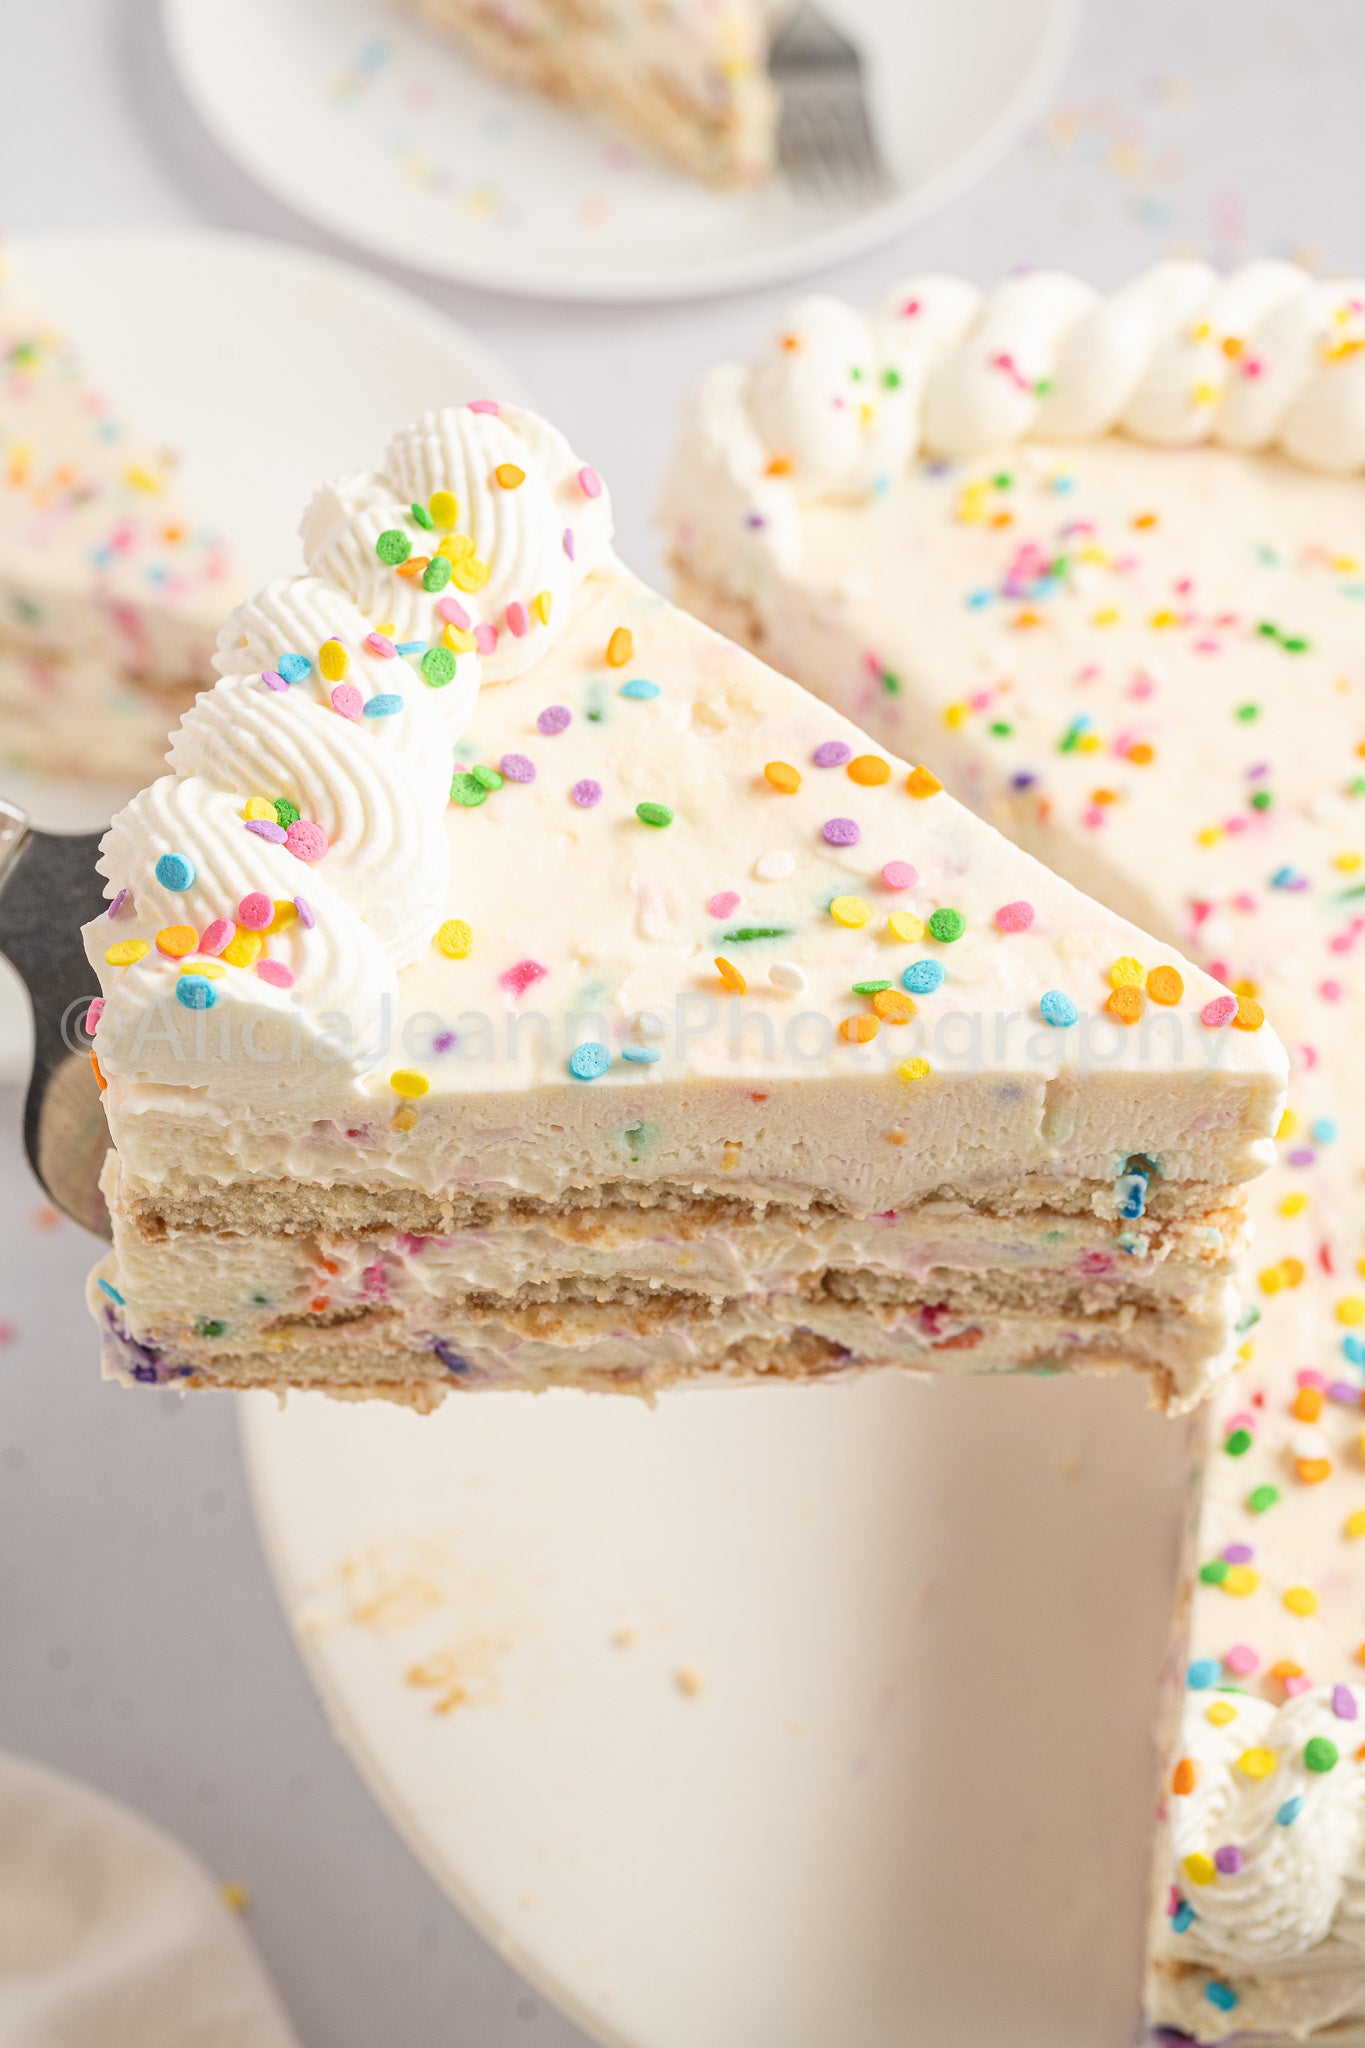 Funfetti Icebox Cake - *EXCLUSIVE*